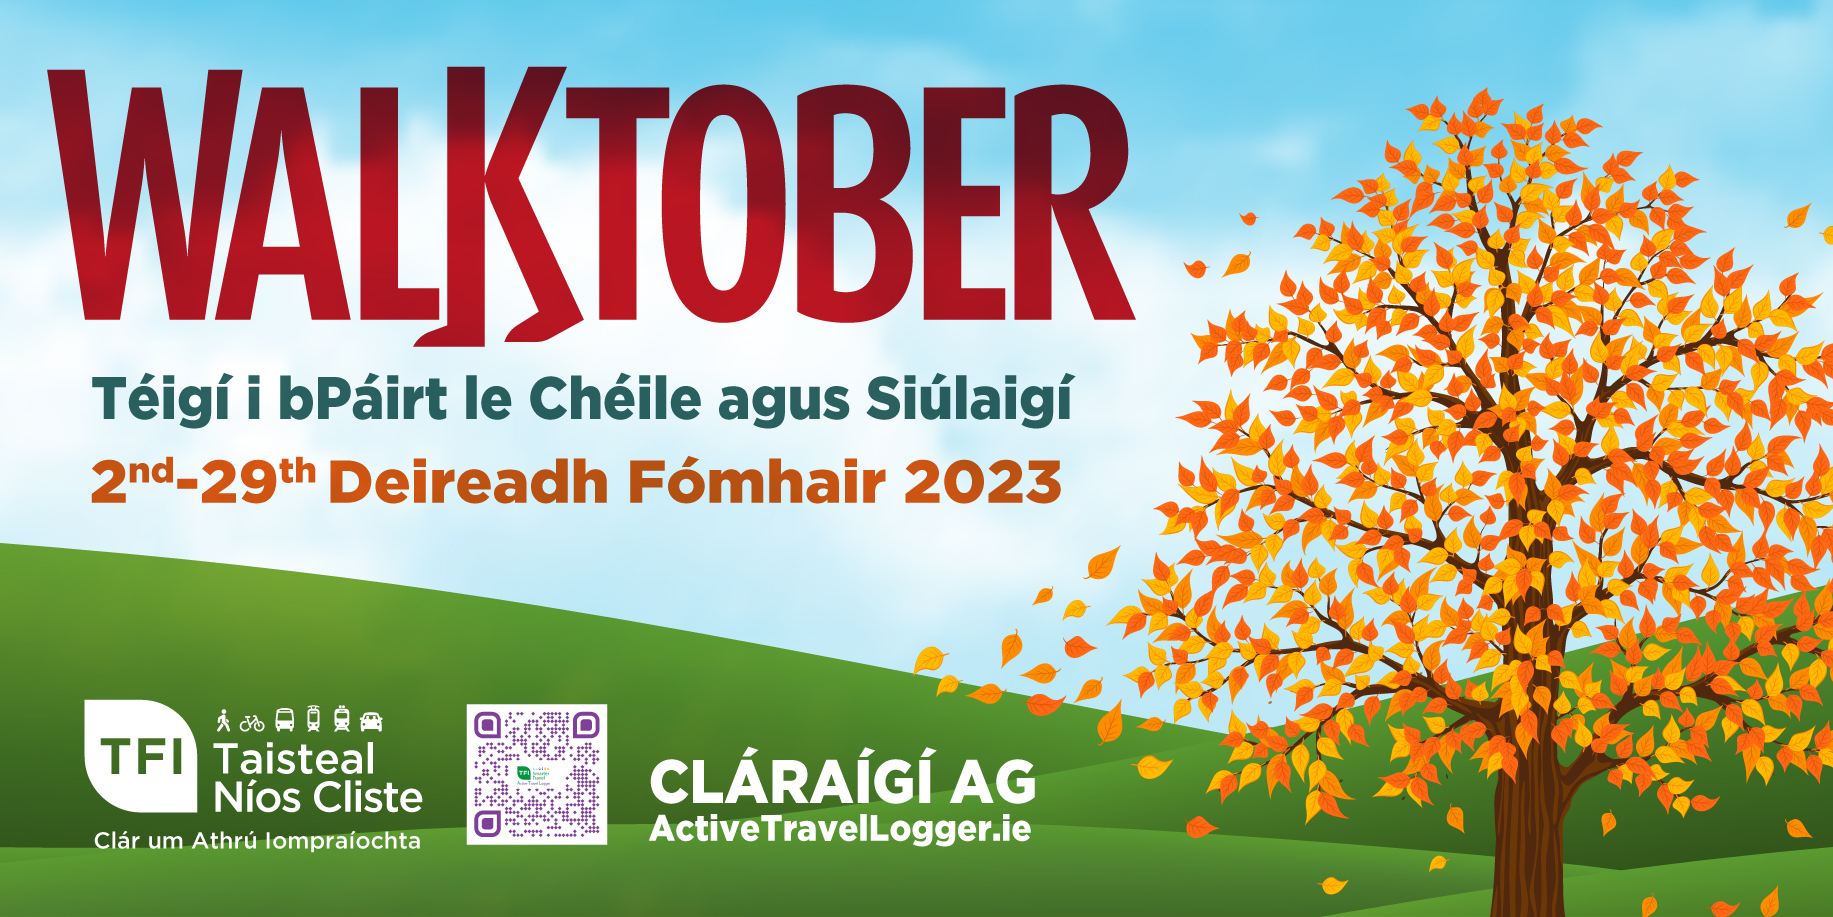 walktober promotional graphic in Irish